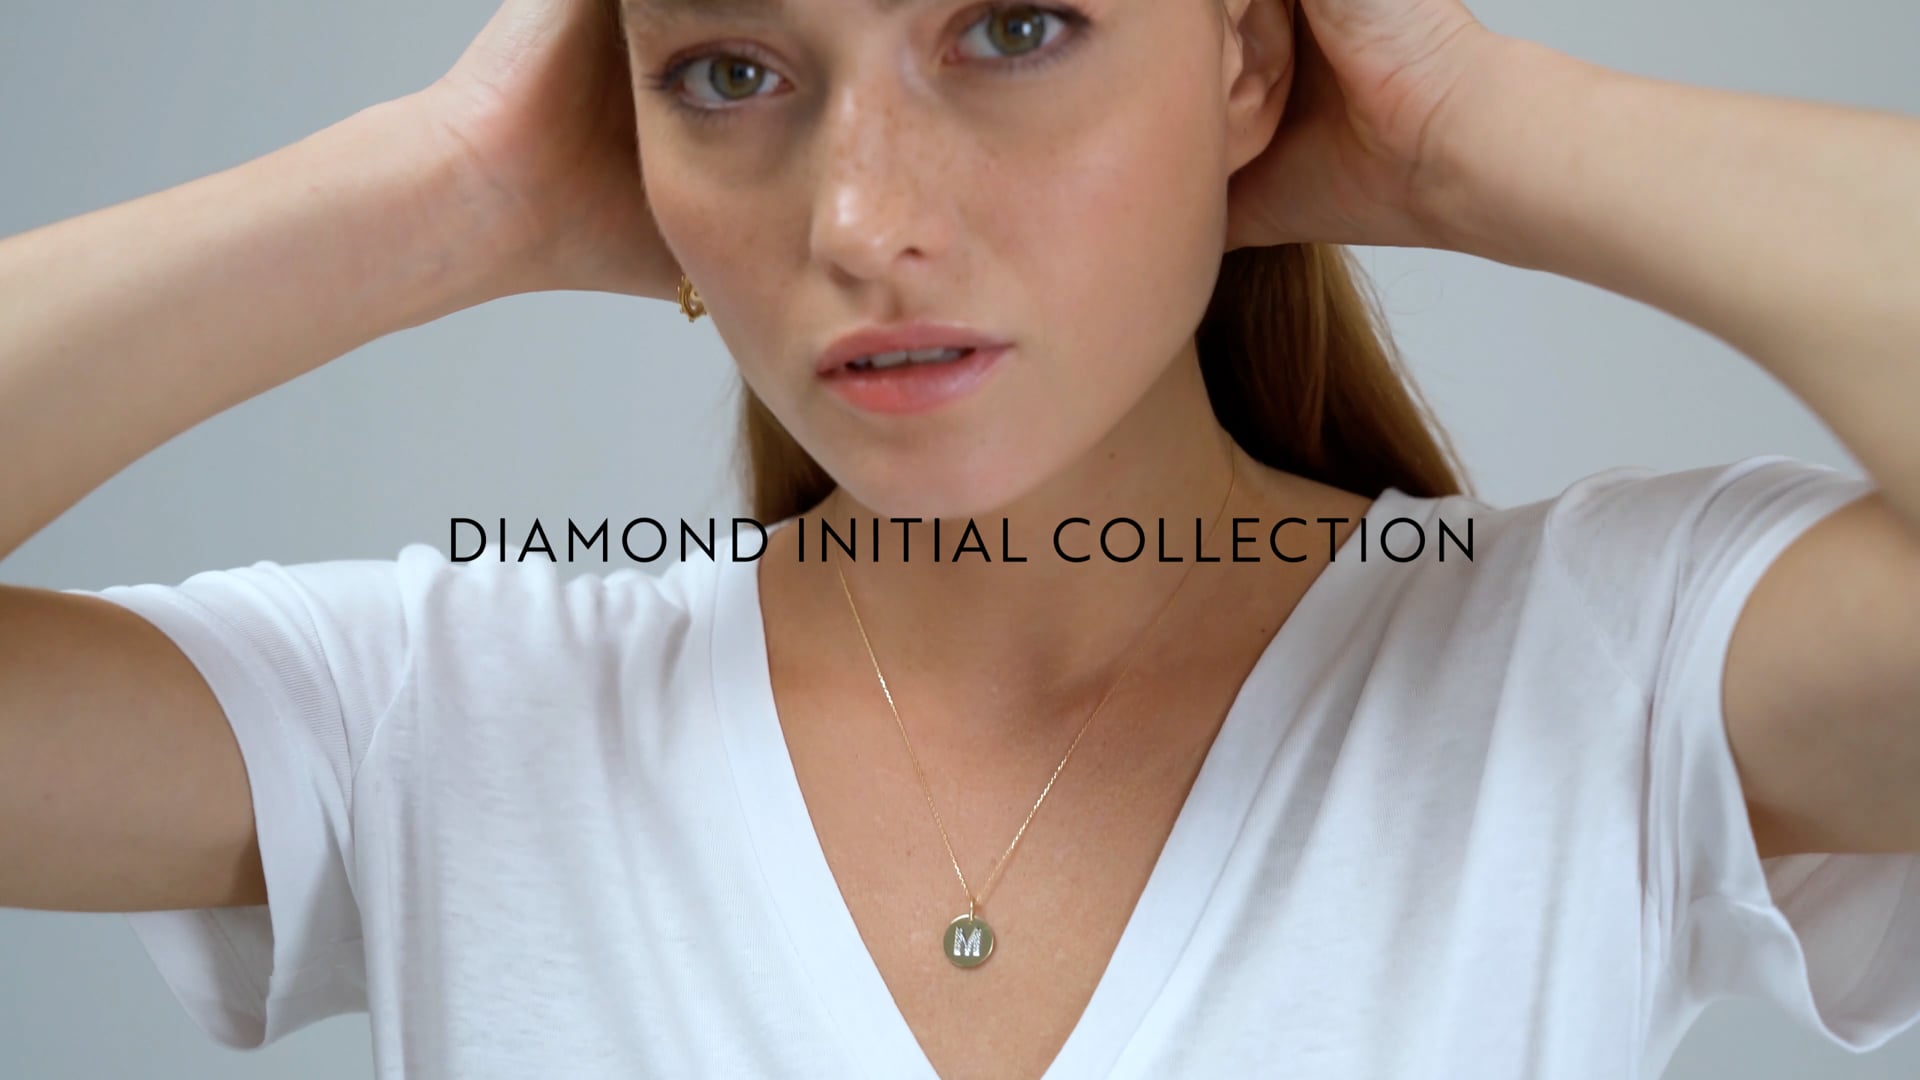 Diamond Initial Collection - Gelin Diamond